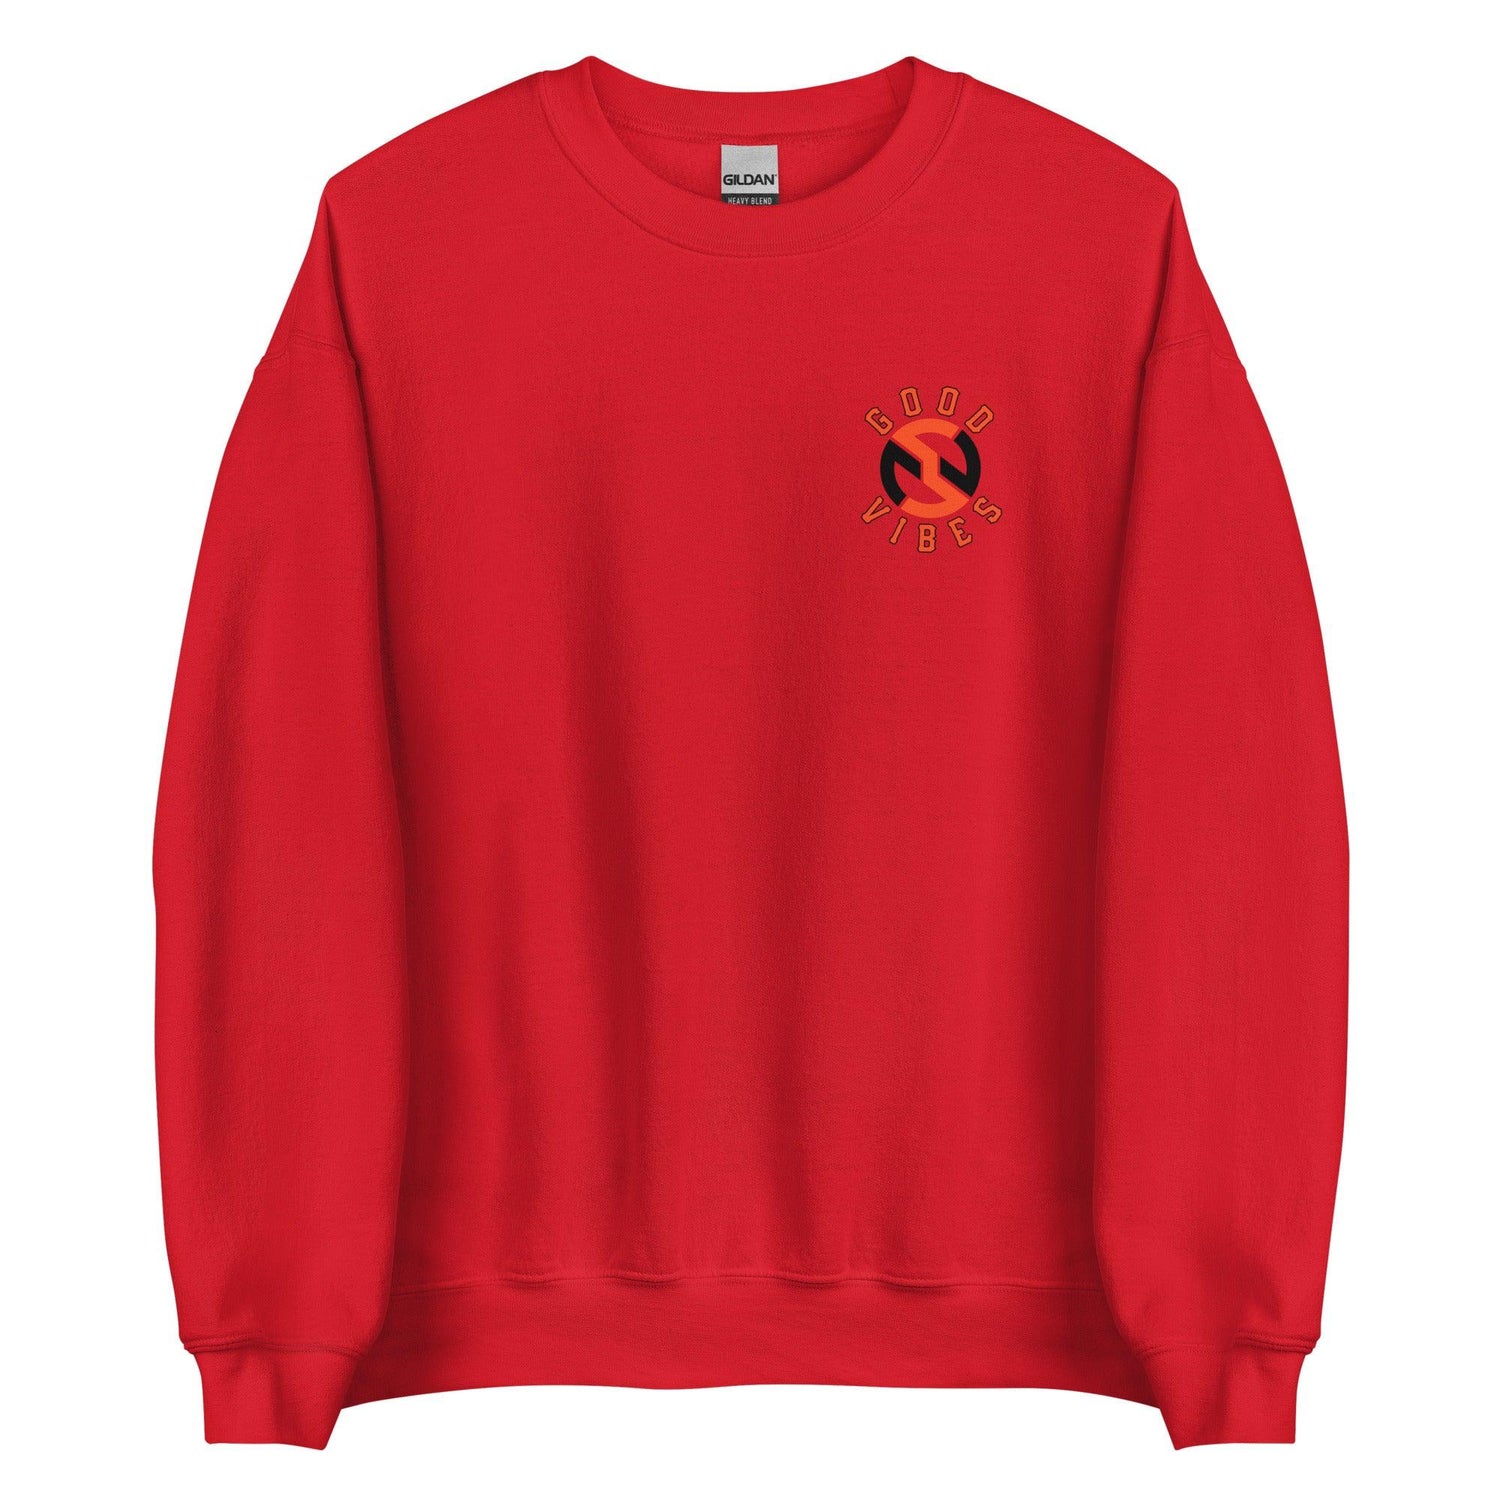 Nick Swiney “Signature” Sweatshirt - Fan Arch